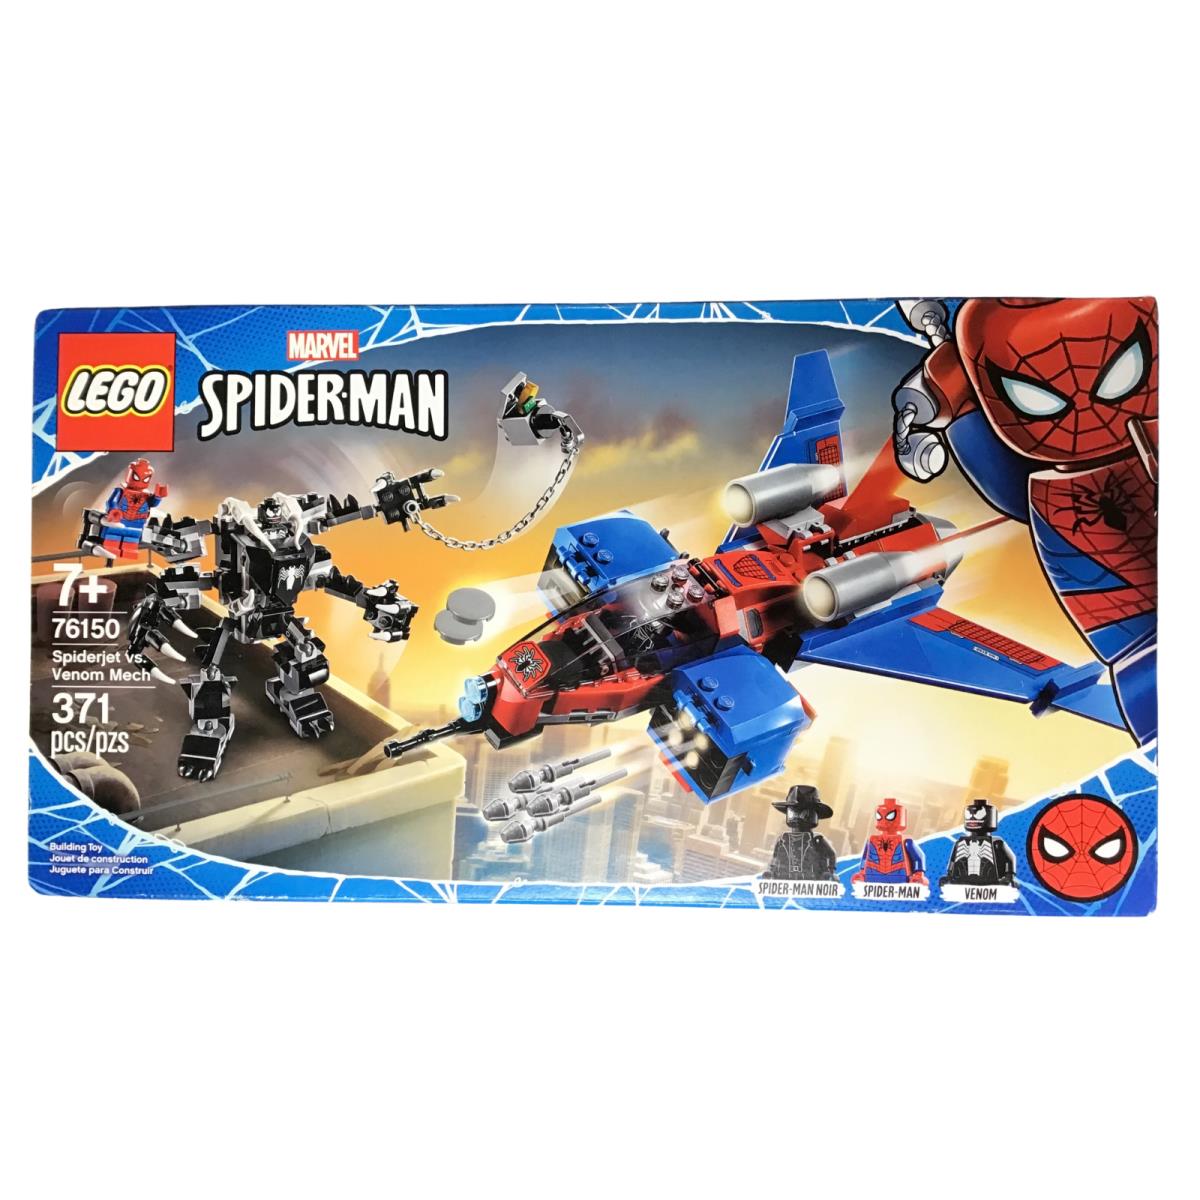 Lego 76150 Marvel Spider-man Spiderjet vs Venom Mech